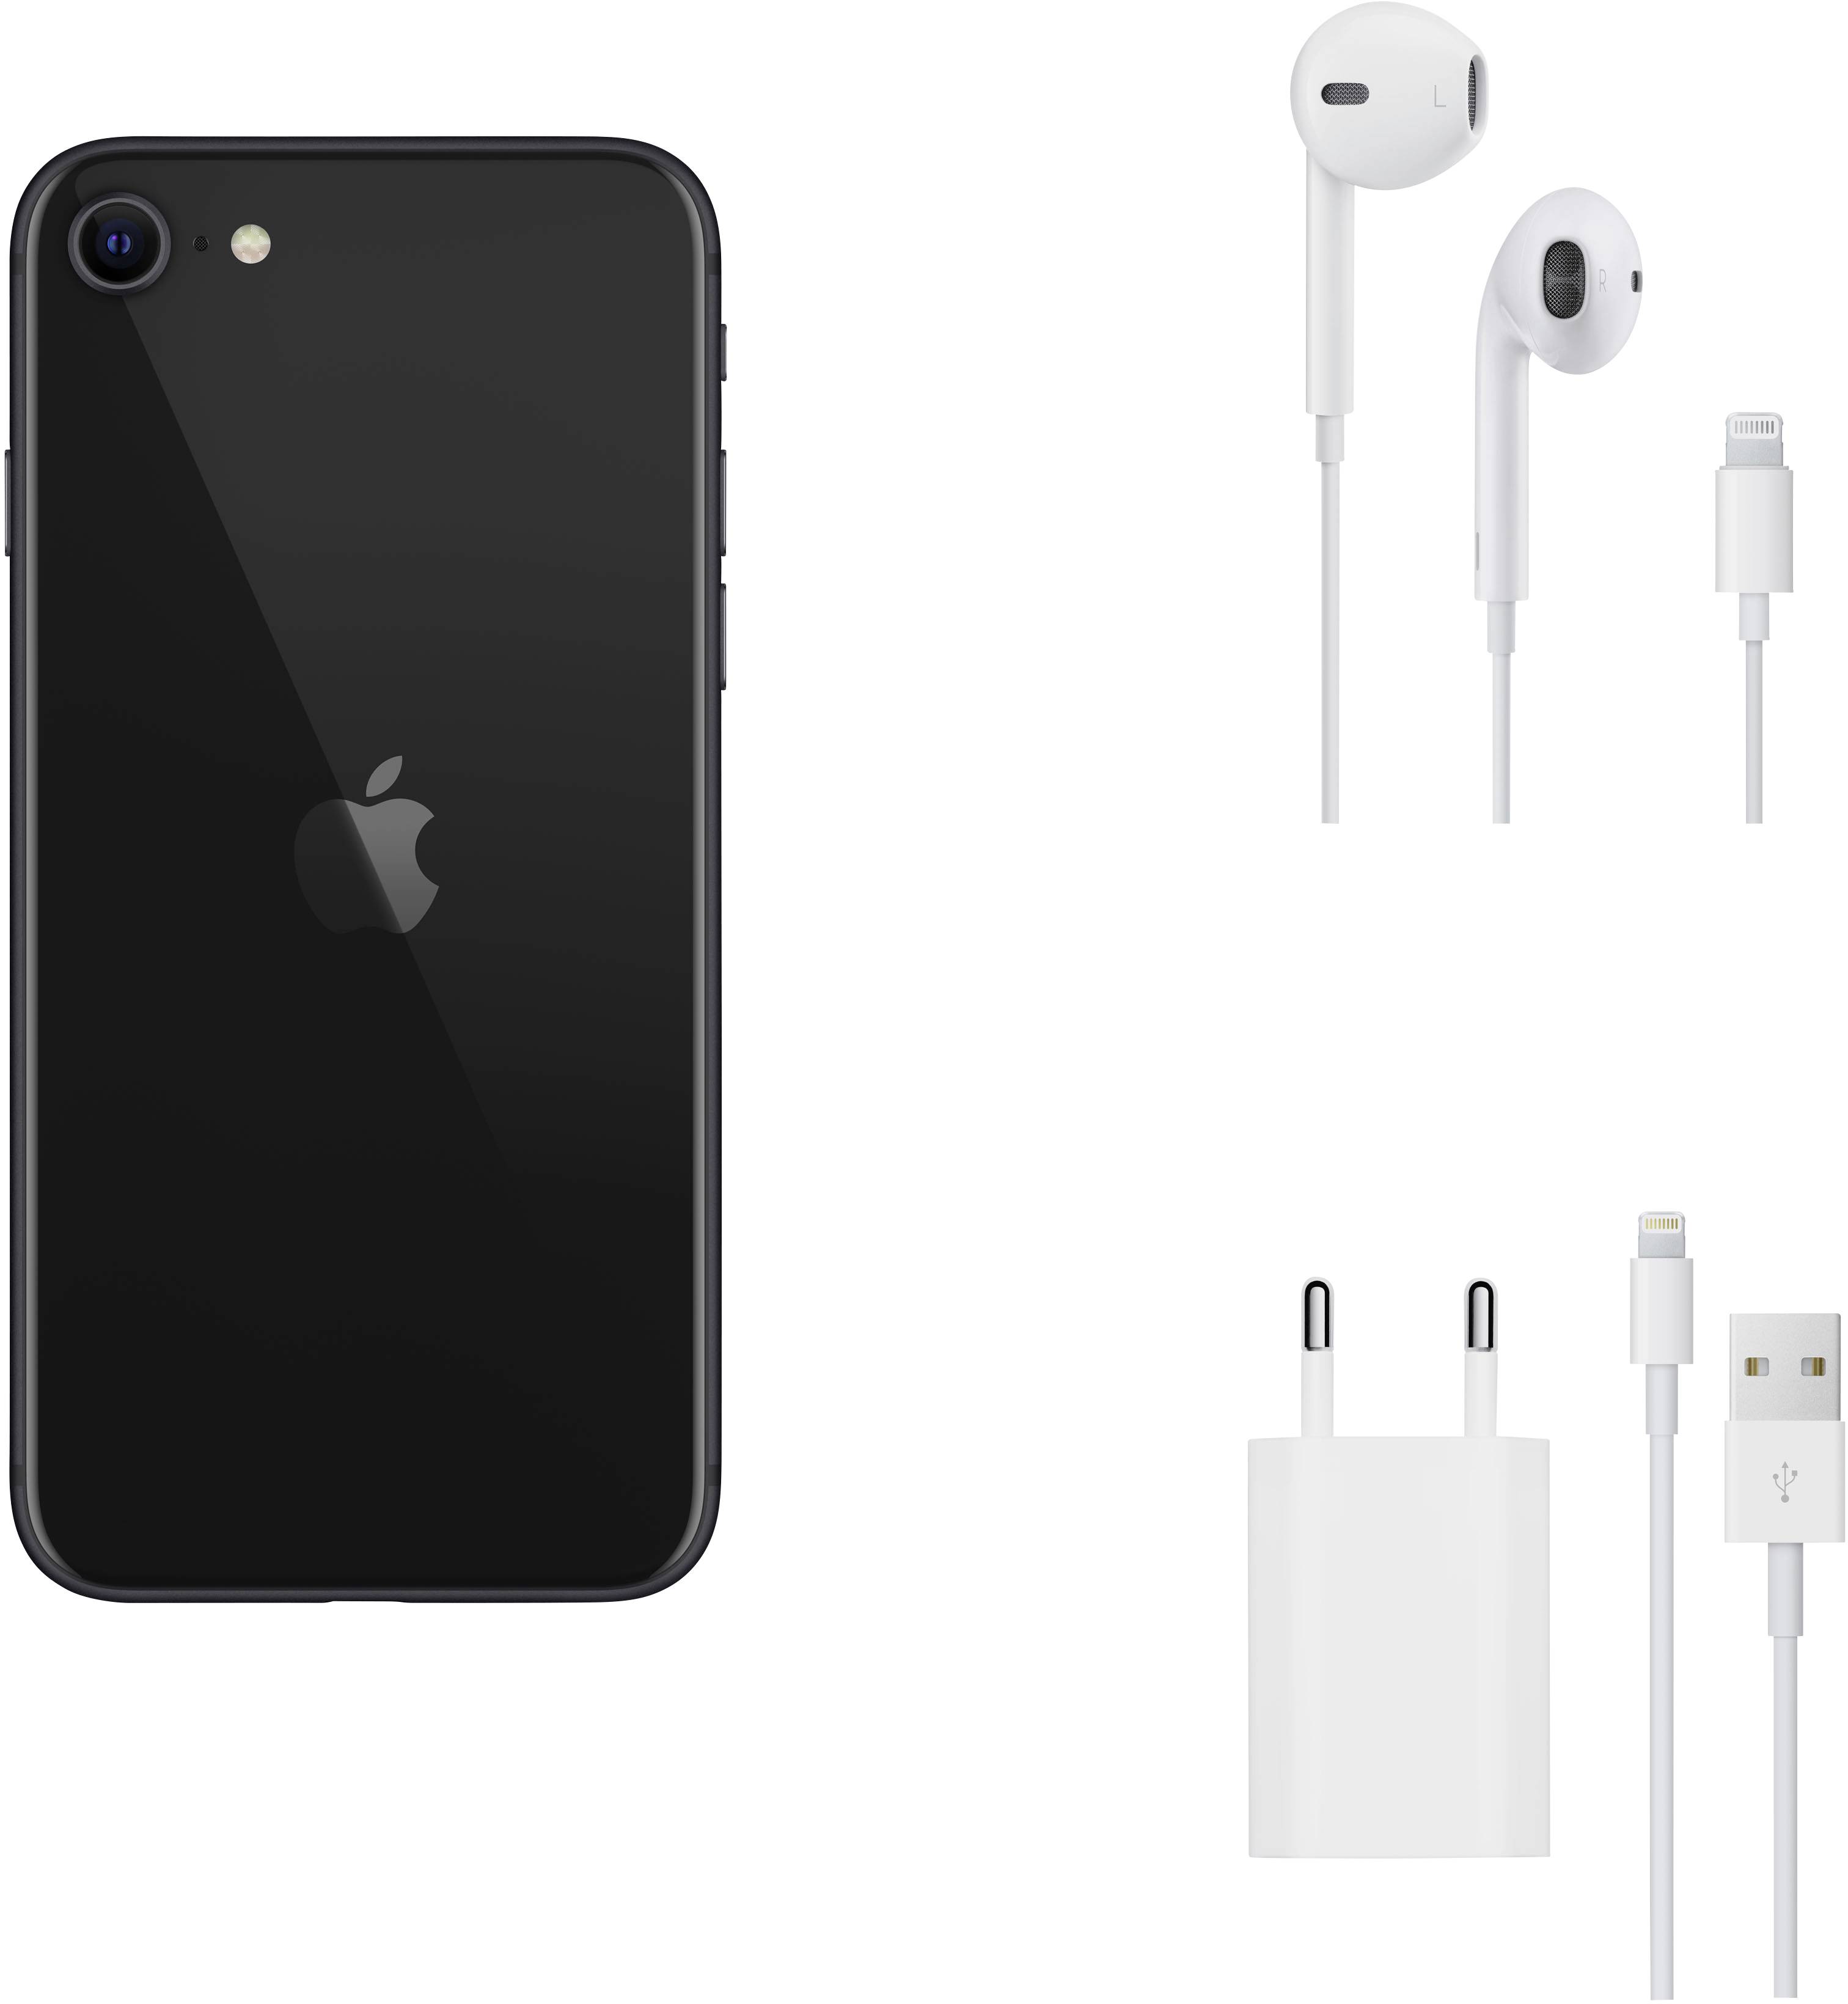 Apple iPhone SE (2. Generation) Black 64 GB 11.9 cm (4.7 inch 